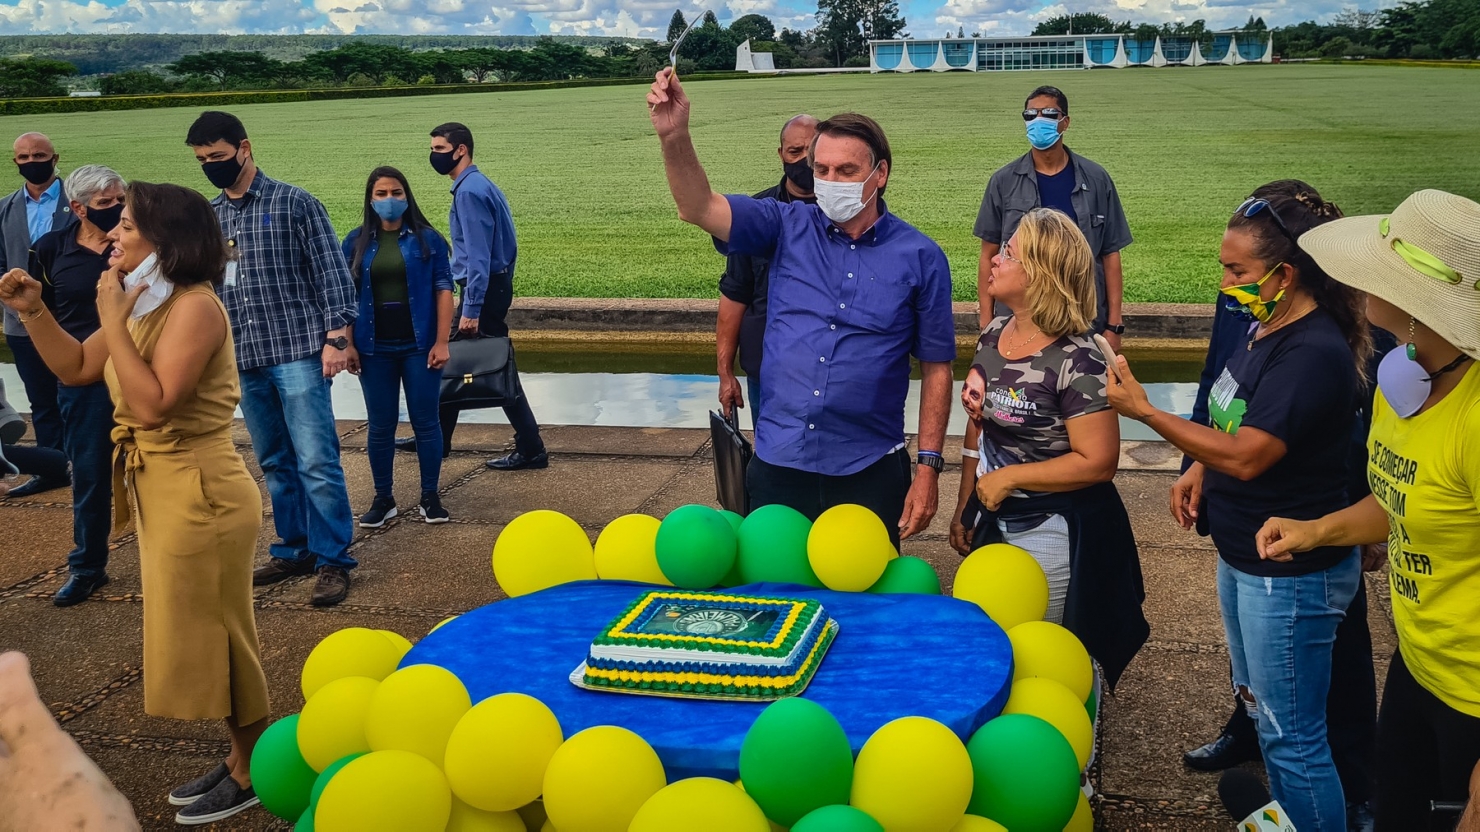 Brazilia - Ziua presedintelui Jair Bolsonaro și record la decese de covid